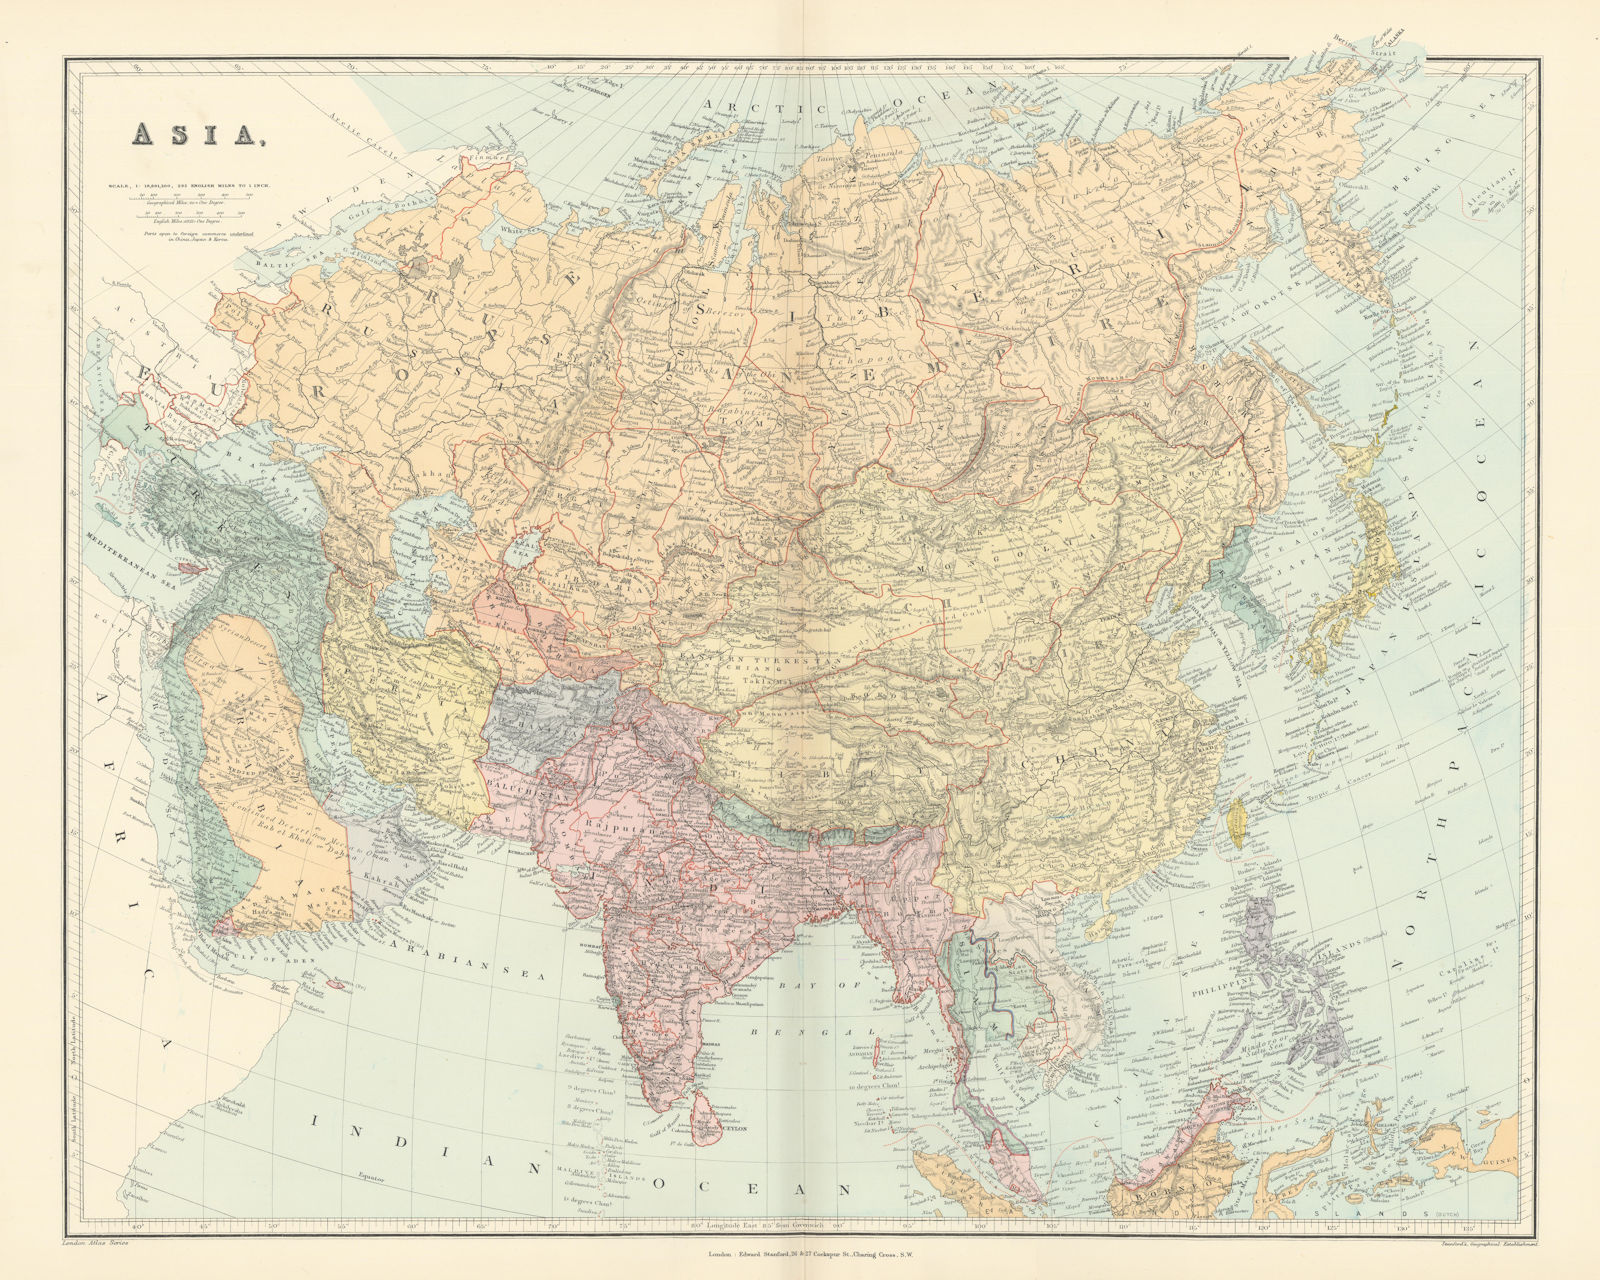 ASIA Japanese Formosa British India Siam Oman Abu Debi (Dhabi) STANFORD 1896 map